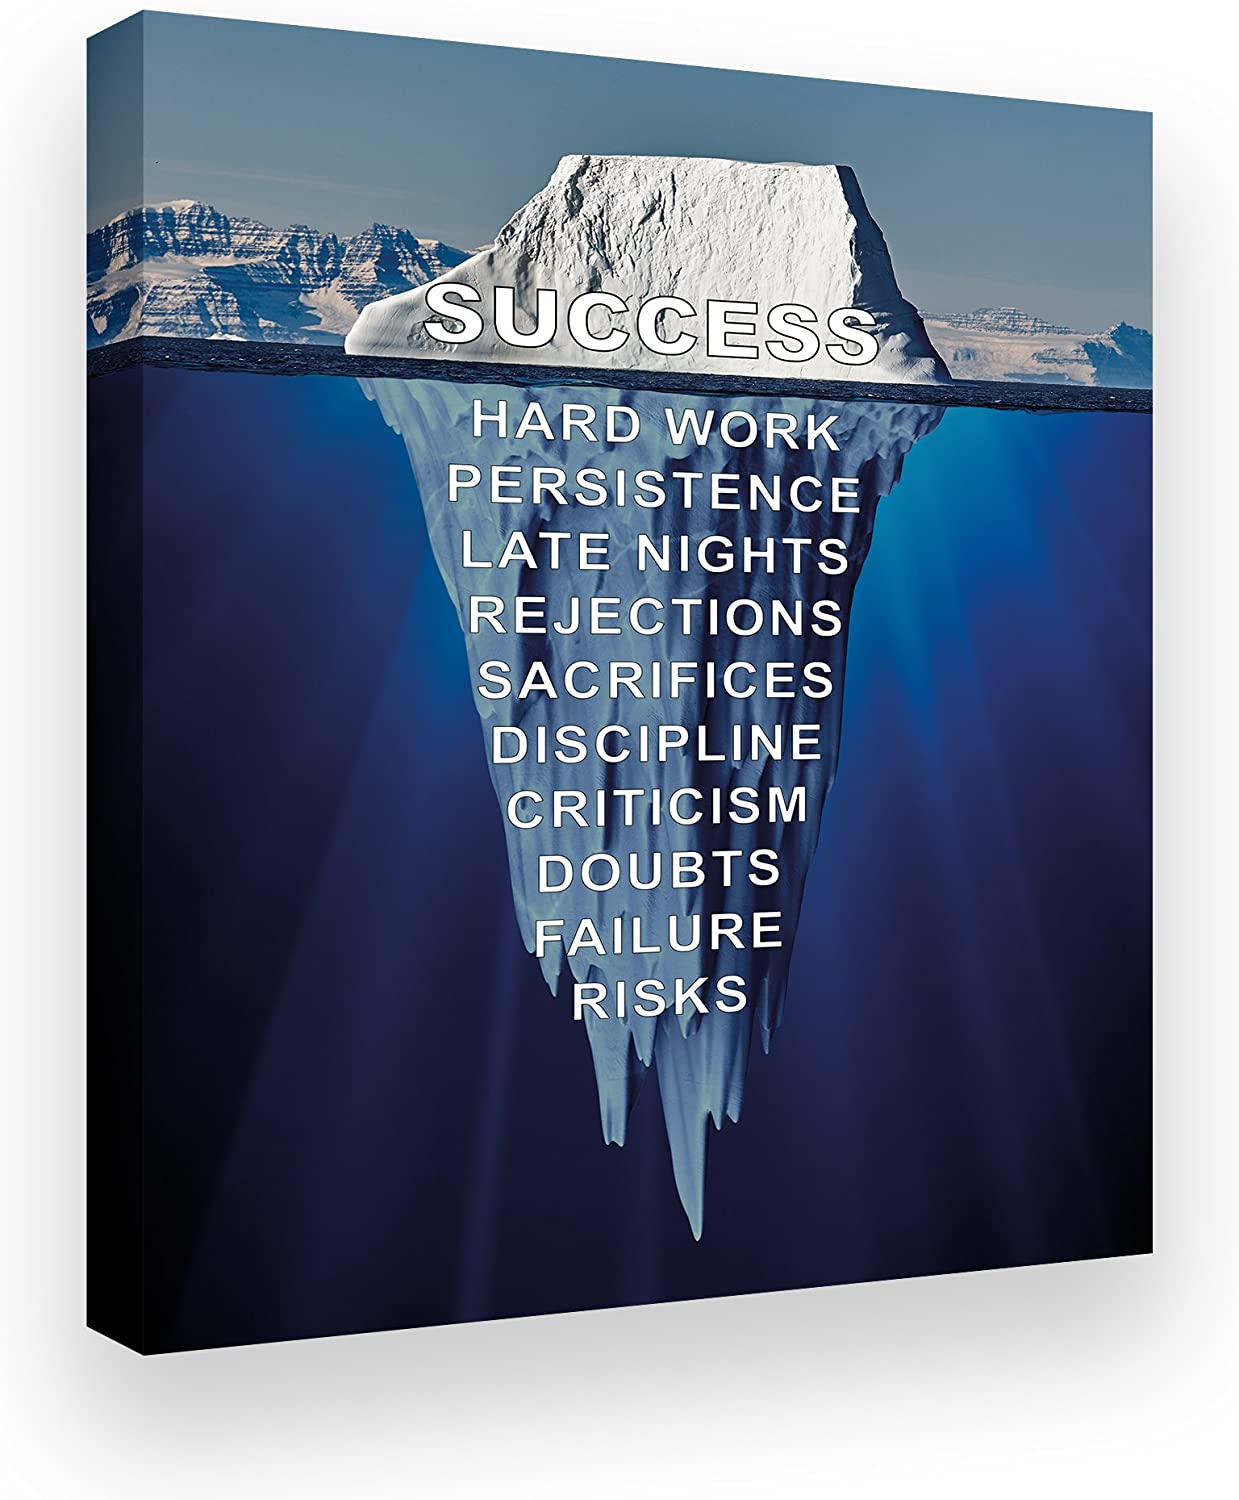 PICSonPAPER Leinwandbild 50 cm x 70 cm, Iceberg of Success, Geschenk, Geschenkidee, Motivationsposter, Motivations-Leinwand, Kunstdruck, Motivationsbild